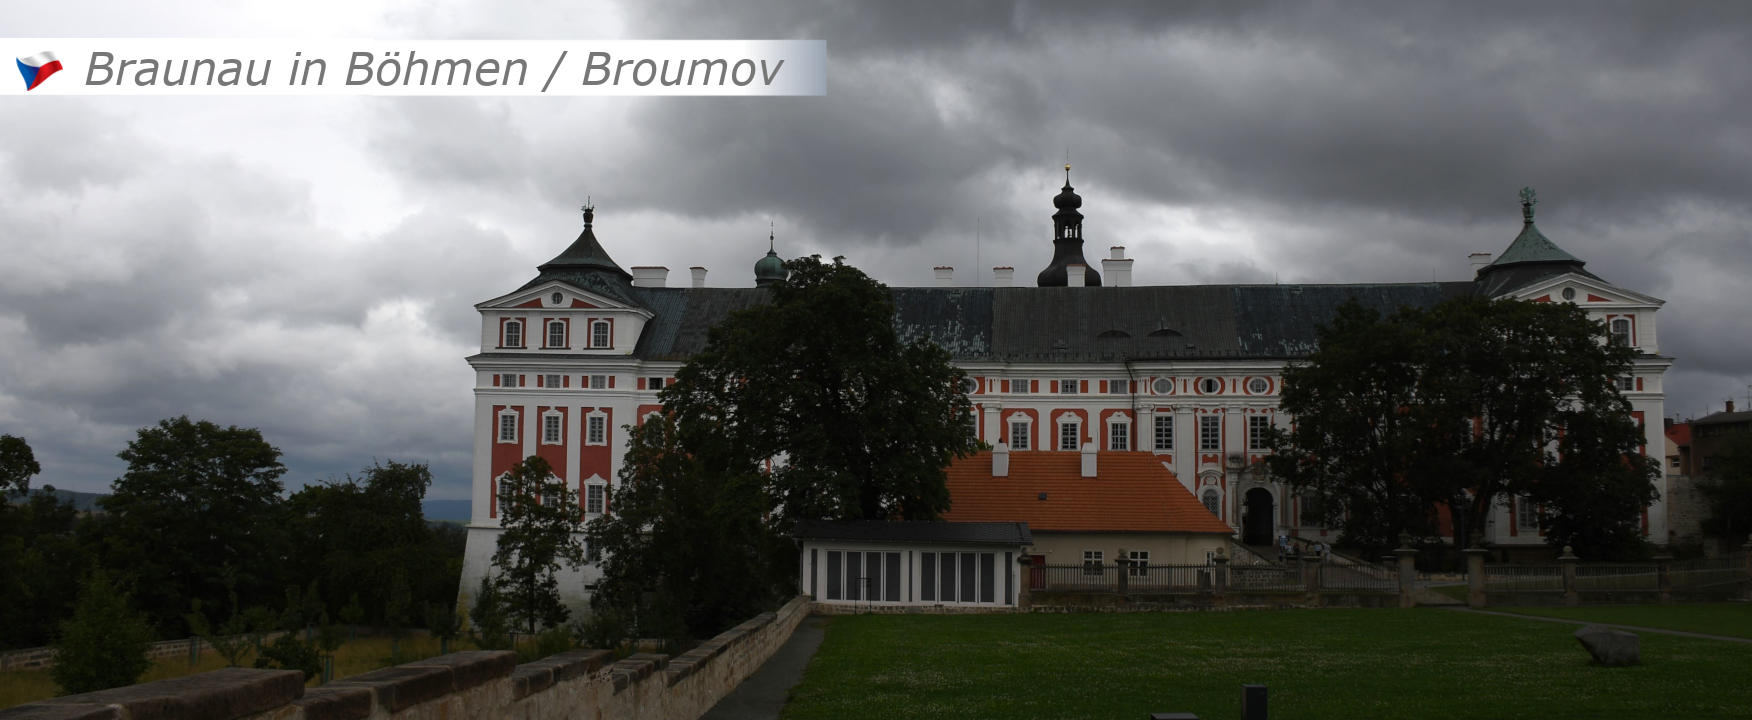 Broumov / Braunau in Böhmen